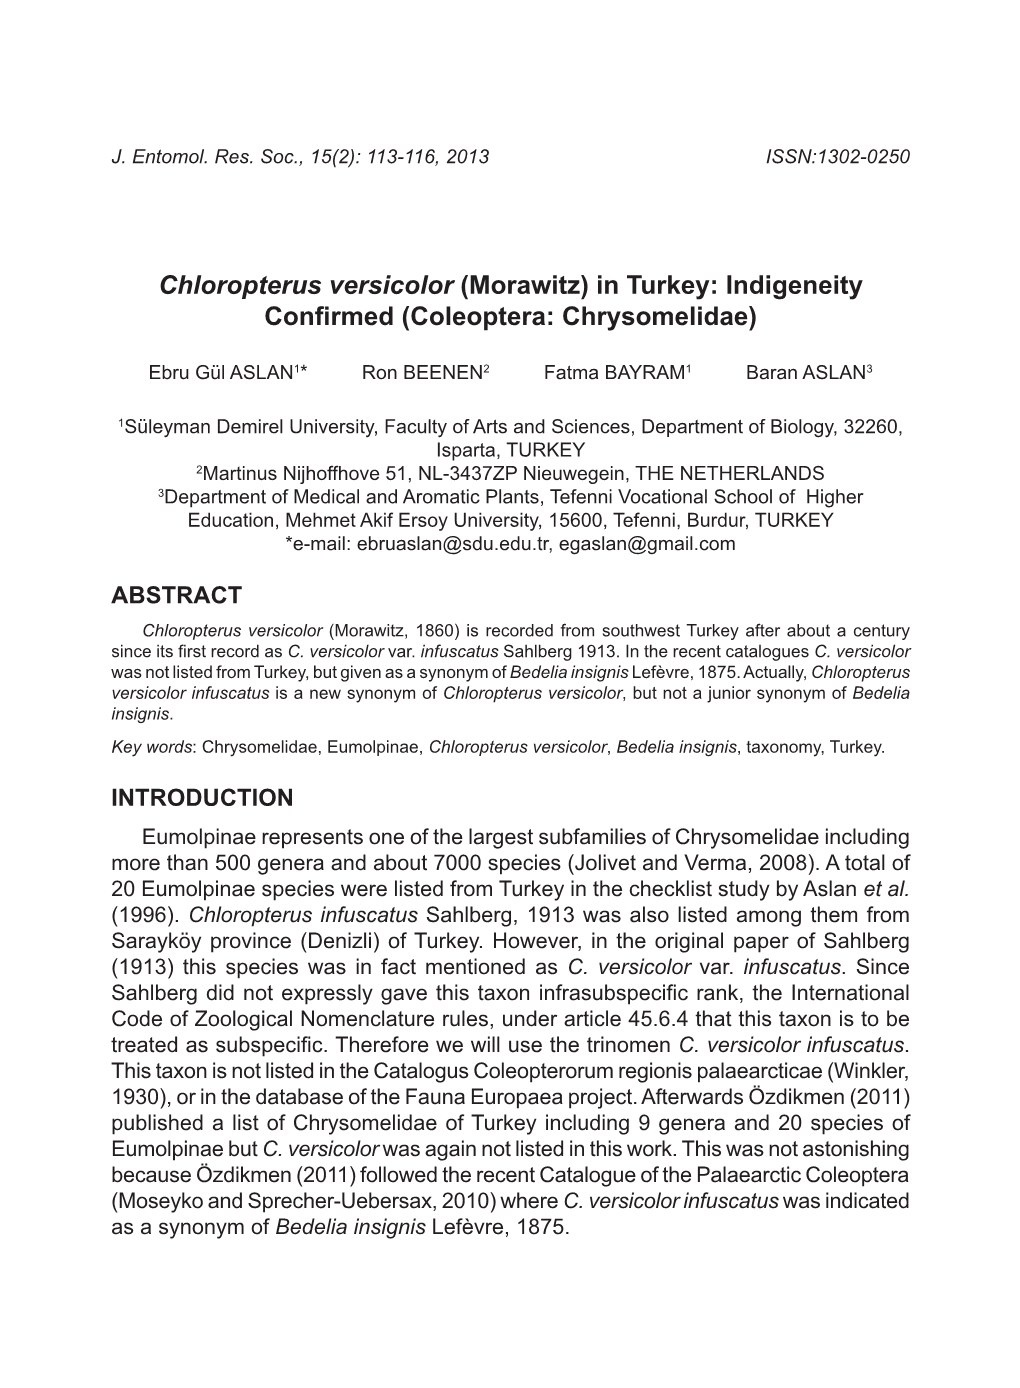 Chloropterus Versicolor (Morawitz) in Turkey: Indigeneity Confirmed (Coleoptera: Chrysomelidae)